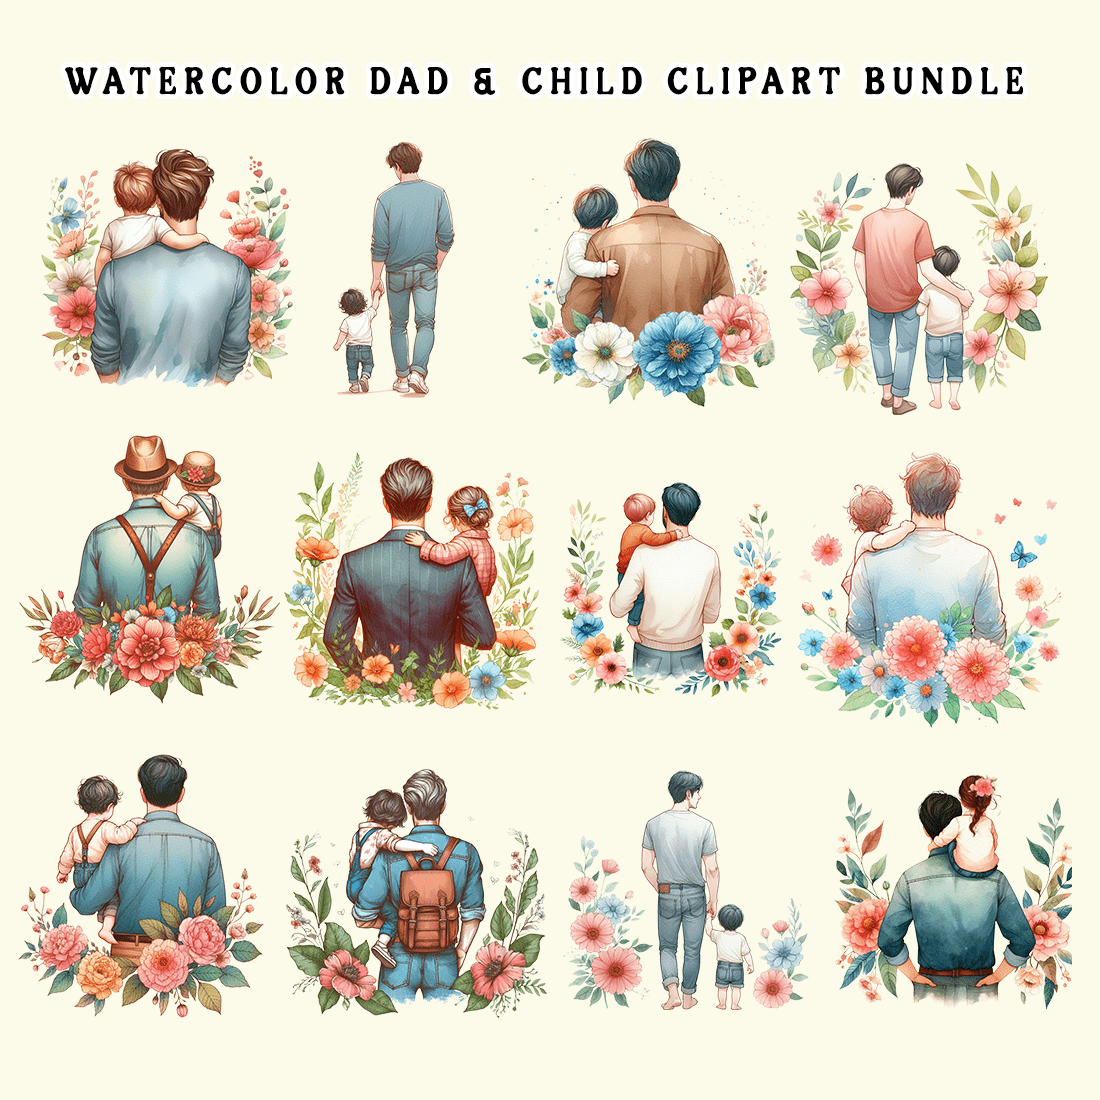 Watercolor Dad & Child Clipart Bundle preview image.